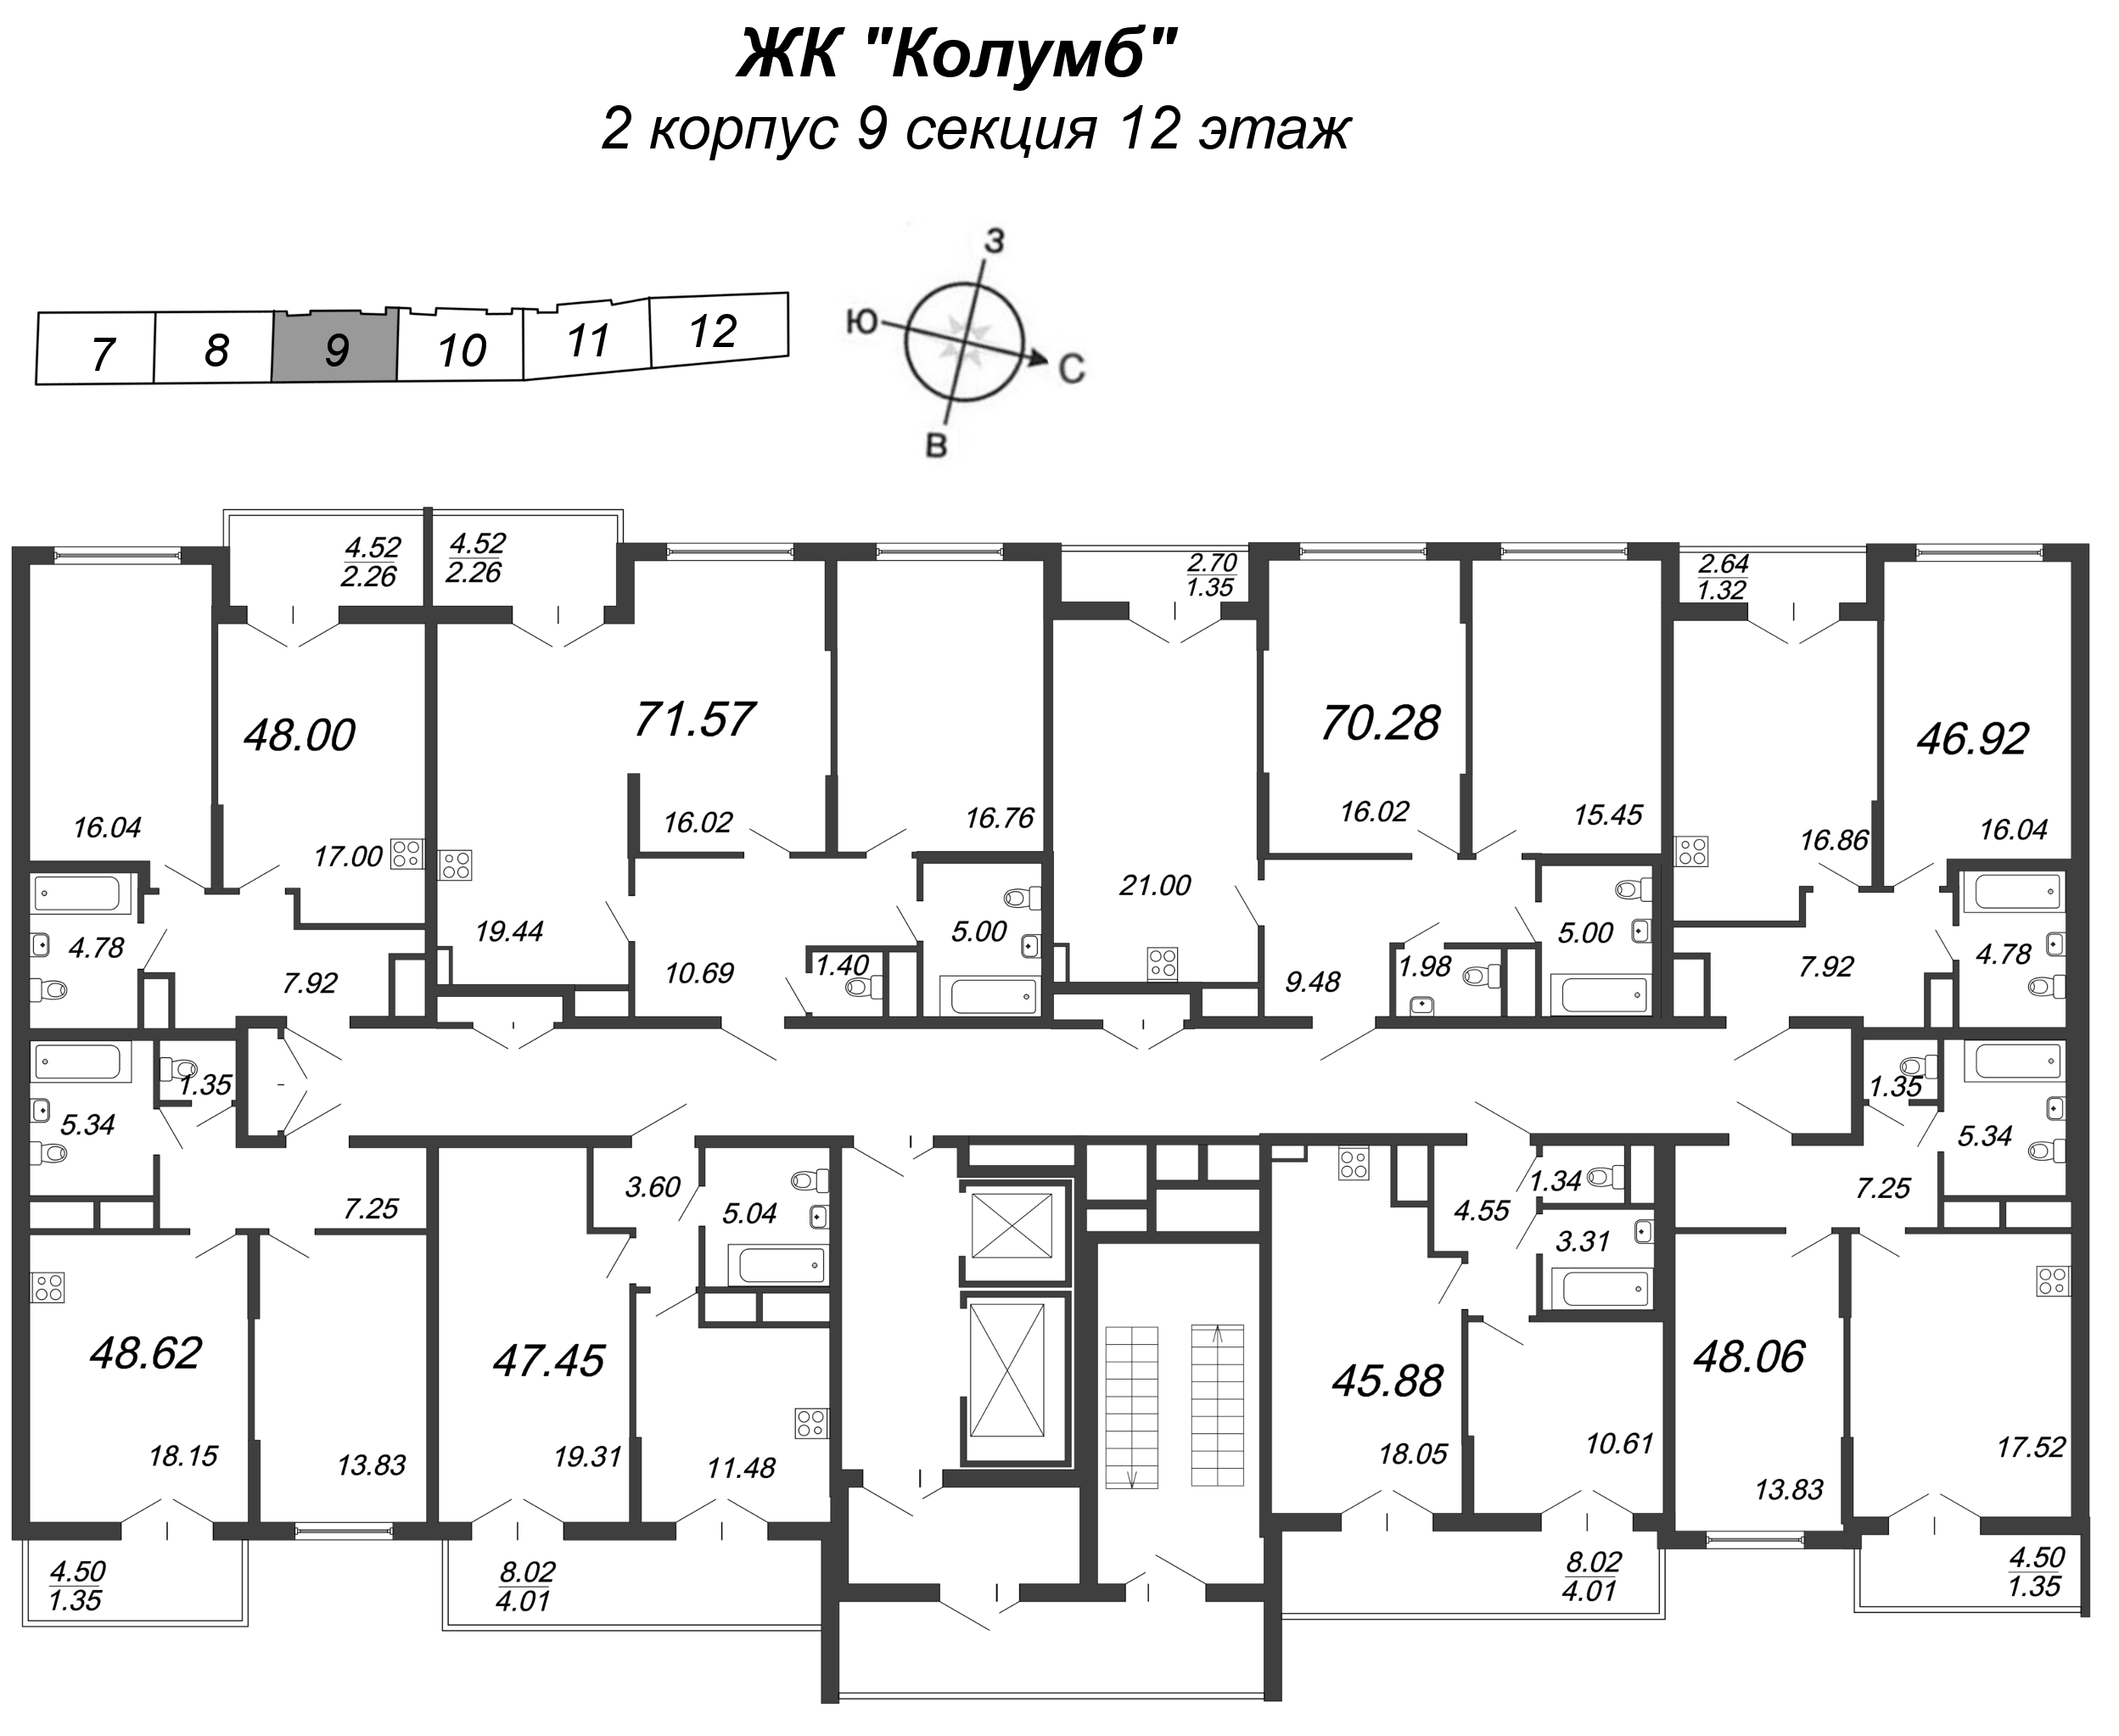 3-комнатная (Евро) квартира, 70.3 м² в ЖК "Колумб" - планировка этажа